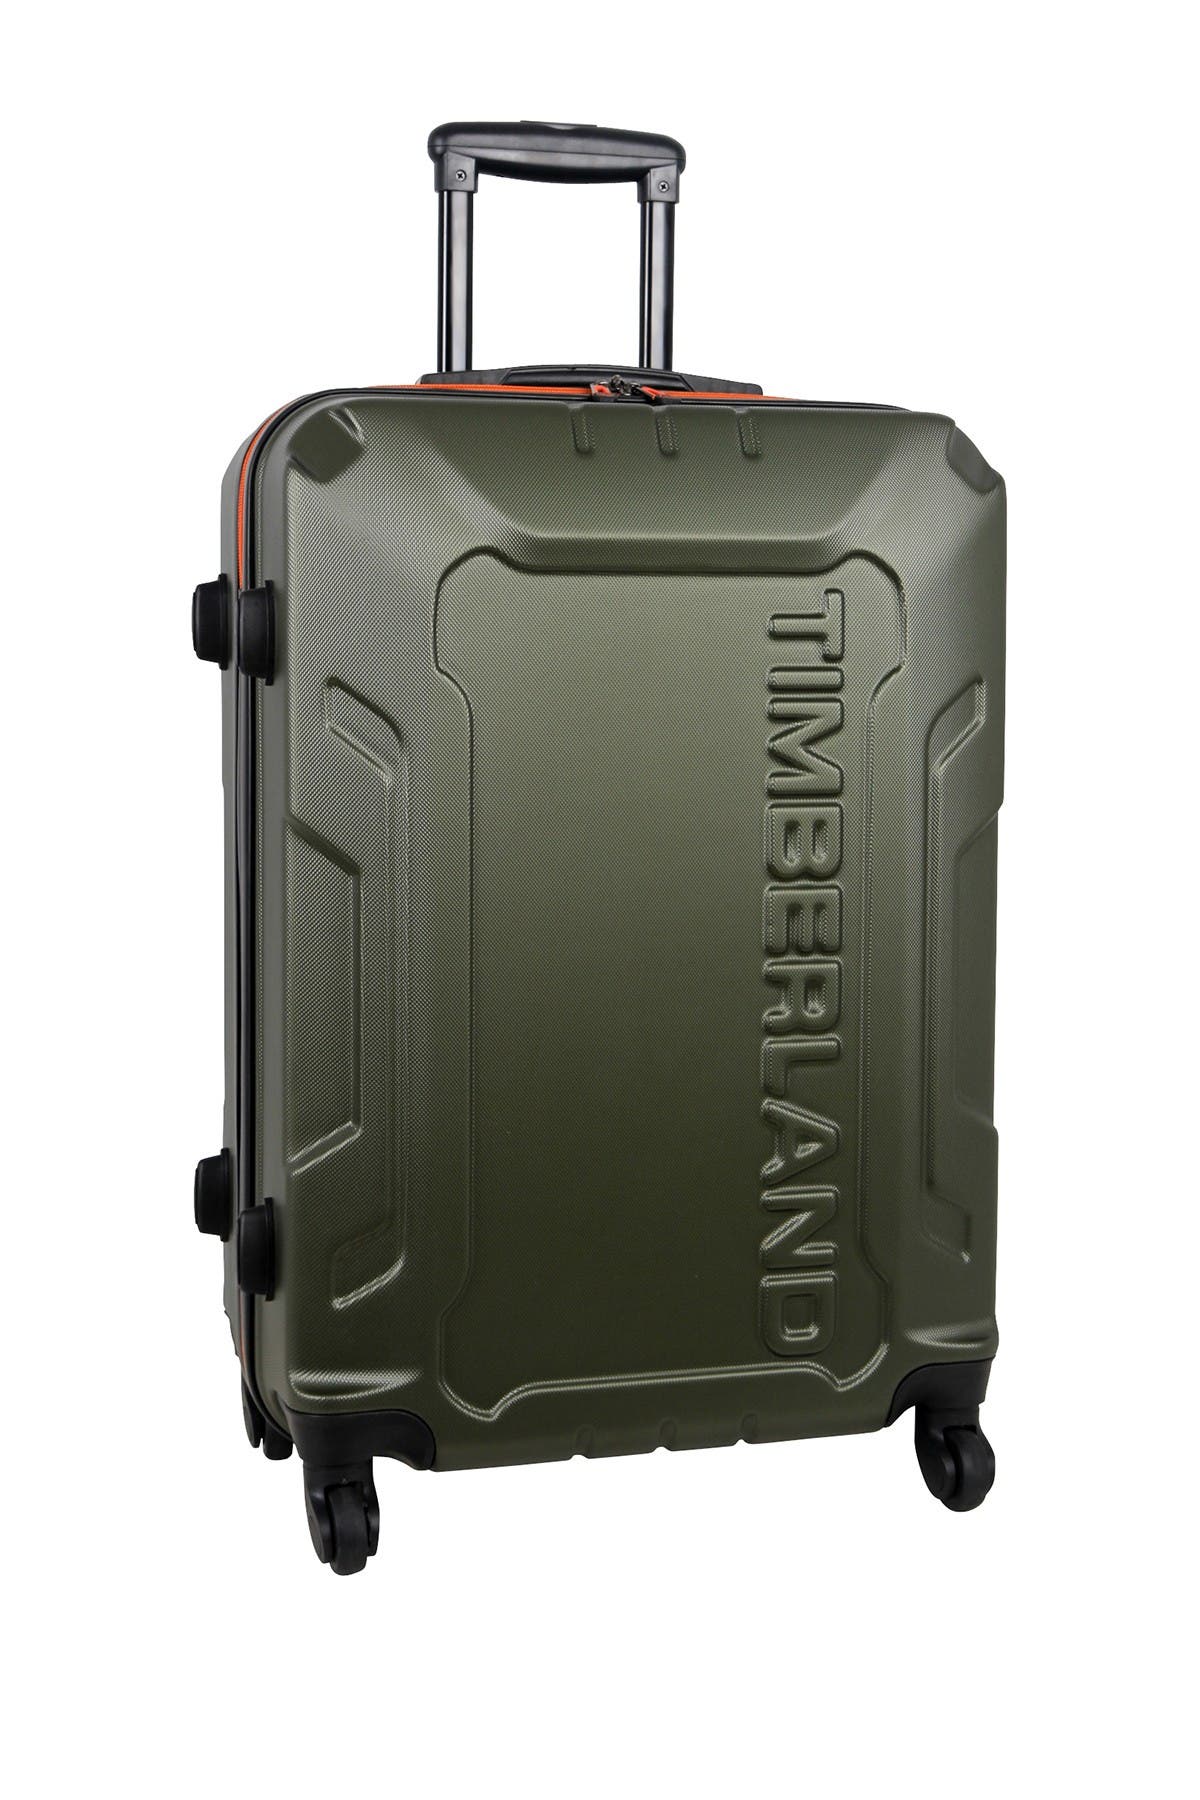 timberland camo suitcase